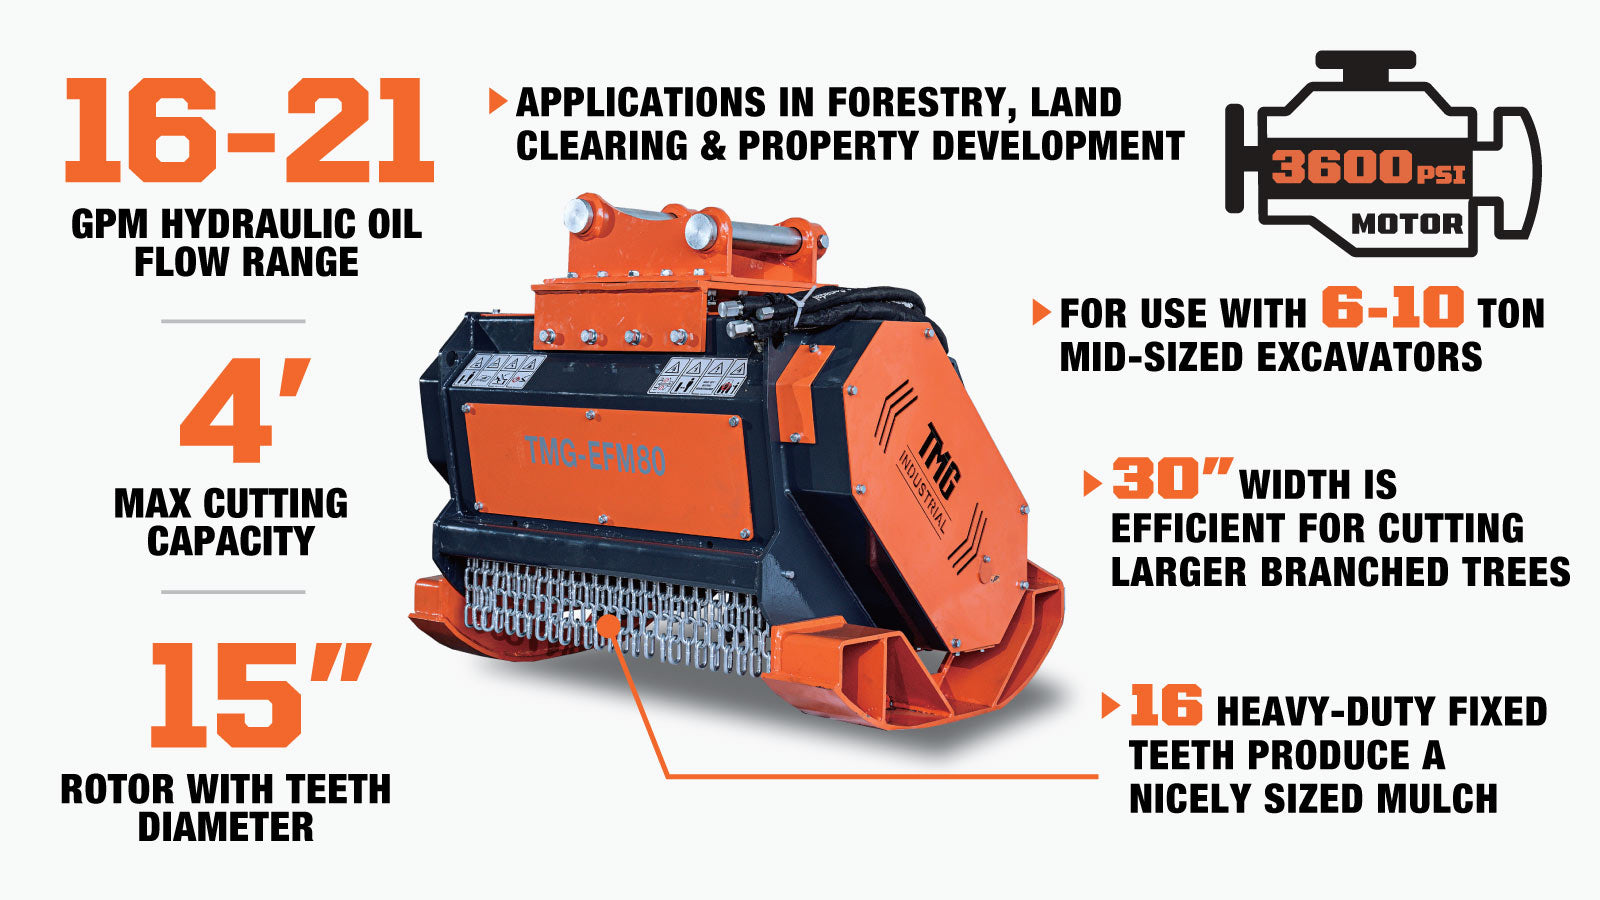 TMG Industrial 30” Excavator Forestry Brush Mulcher, 6-10 Ton Carrier, 4” Dia. Cutting Capacity, Hydraulic Piston Motor, TMG-EFM80-description-image